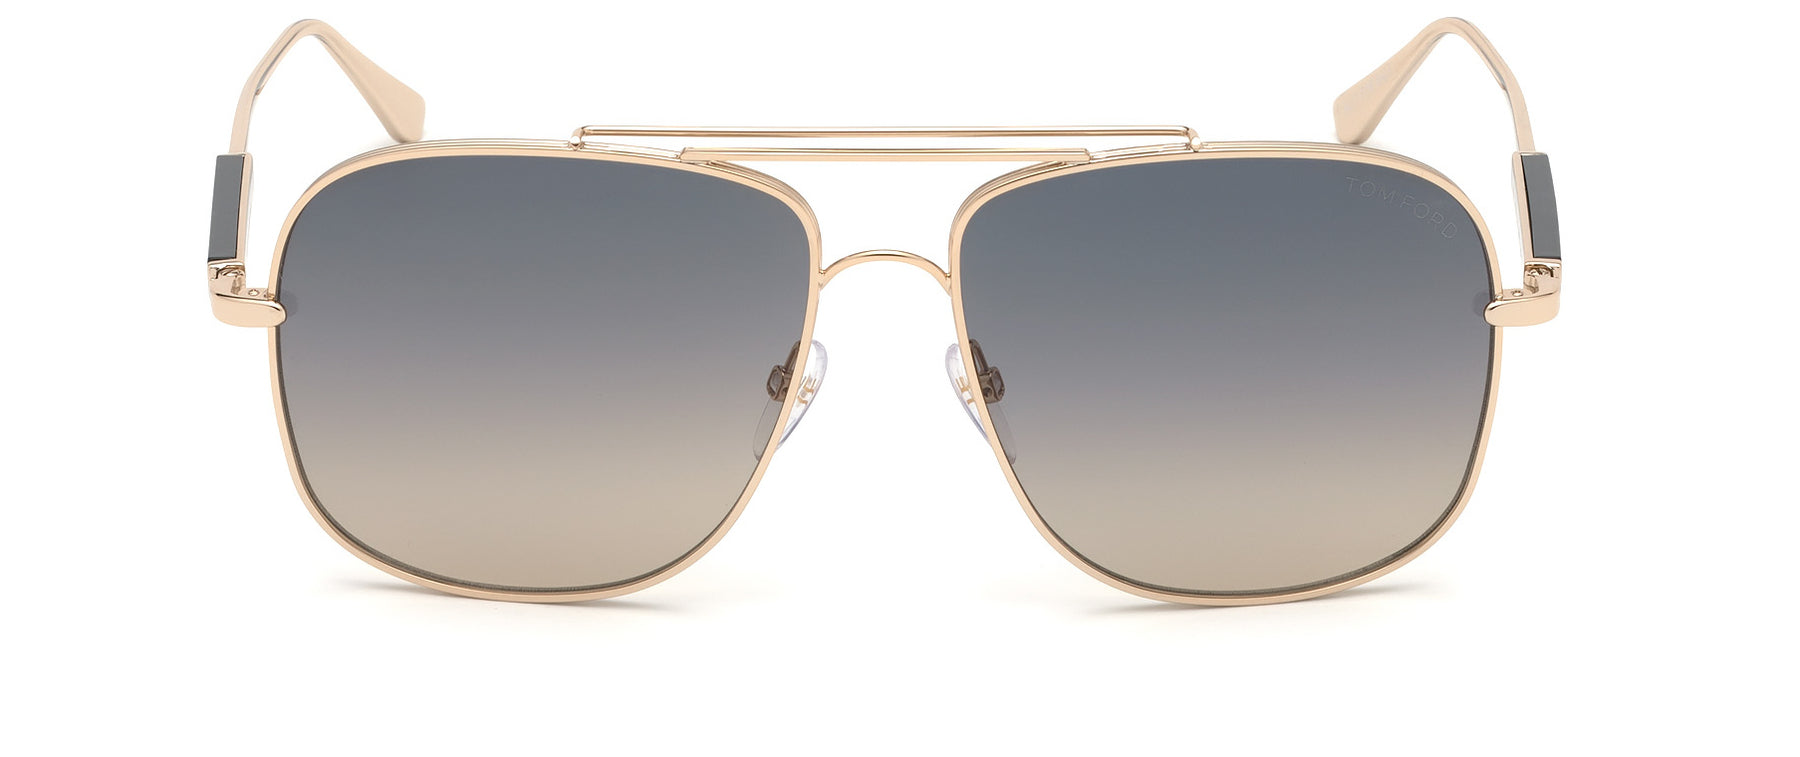 Tom Ford Jude TF669 Sunglasses | Fashion Eyewear US